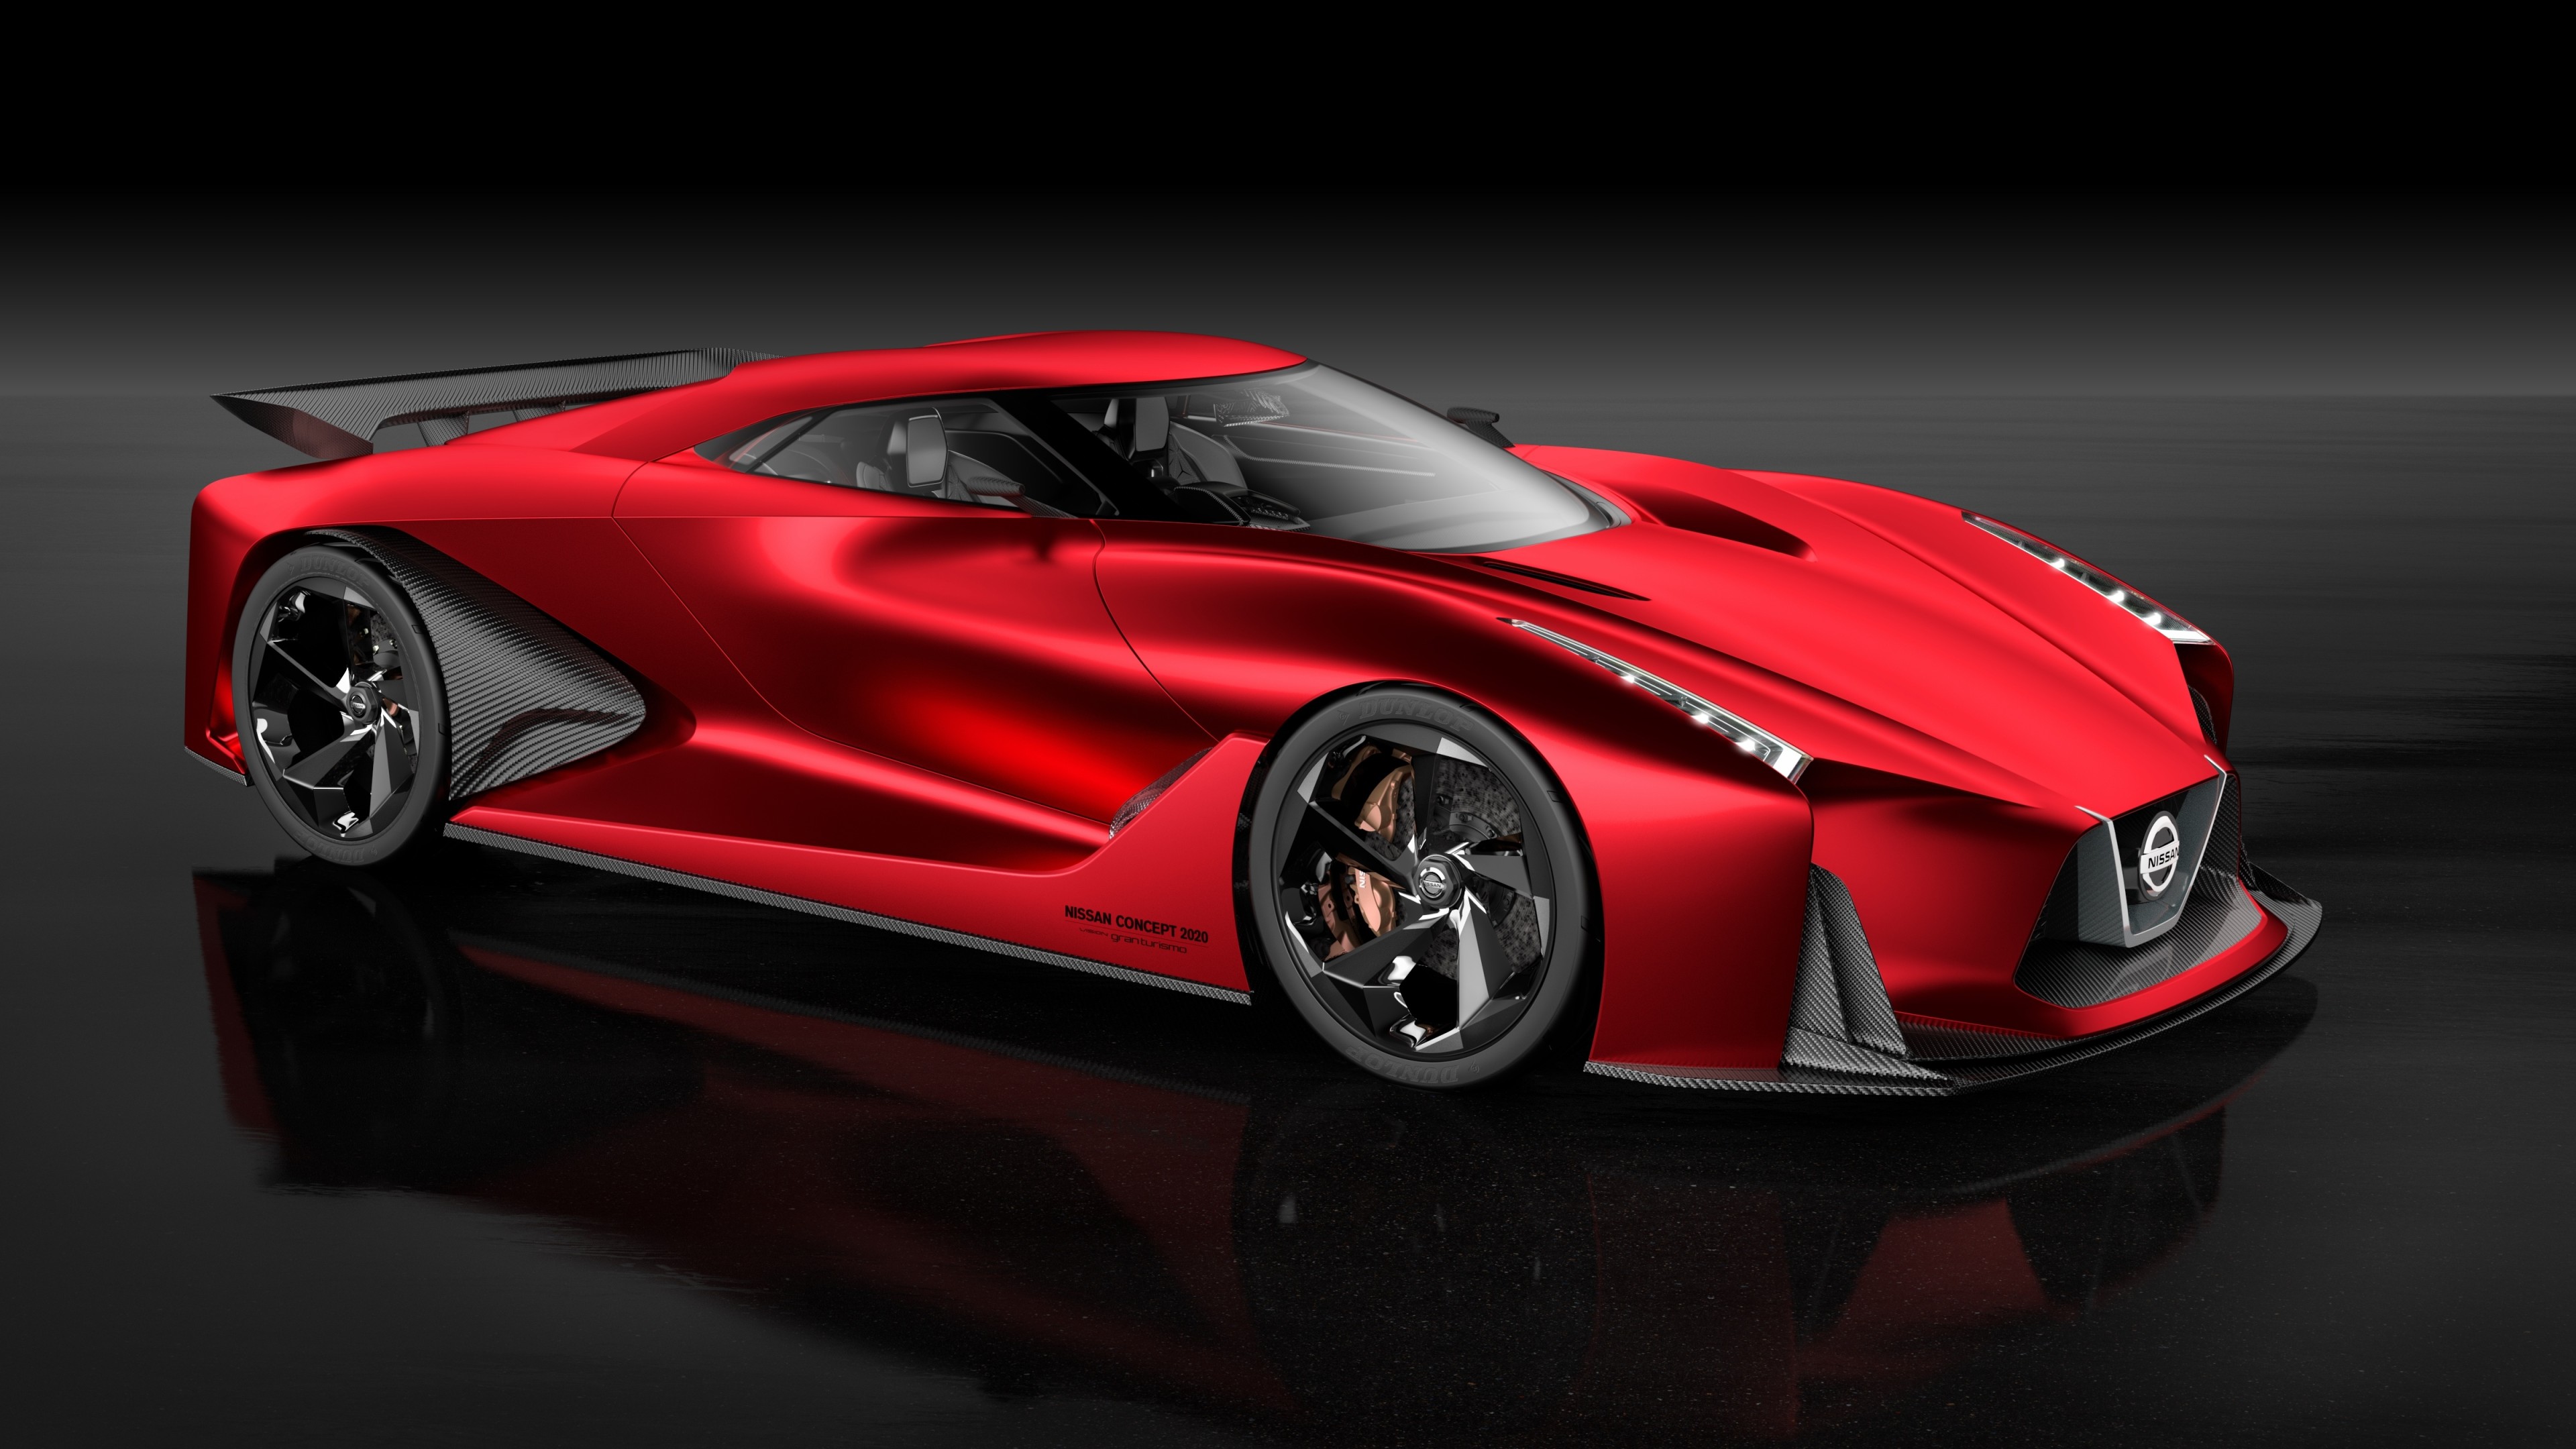 Nissan Concept 2020 Vision Gran Turismo 4k Wallpaper Hd Car